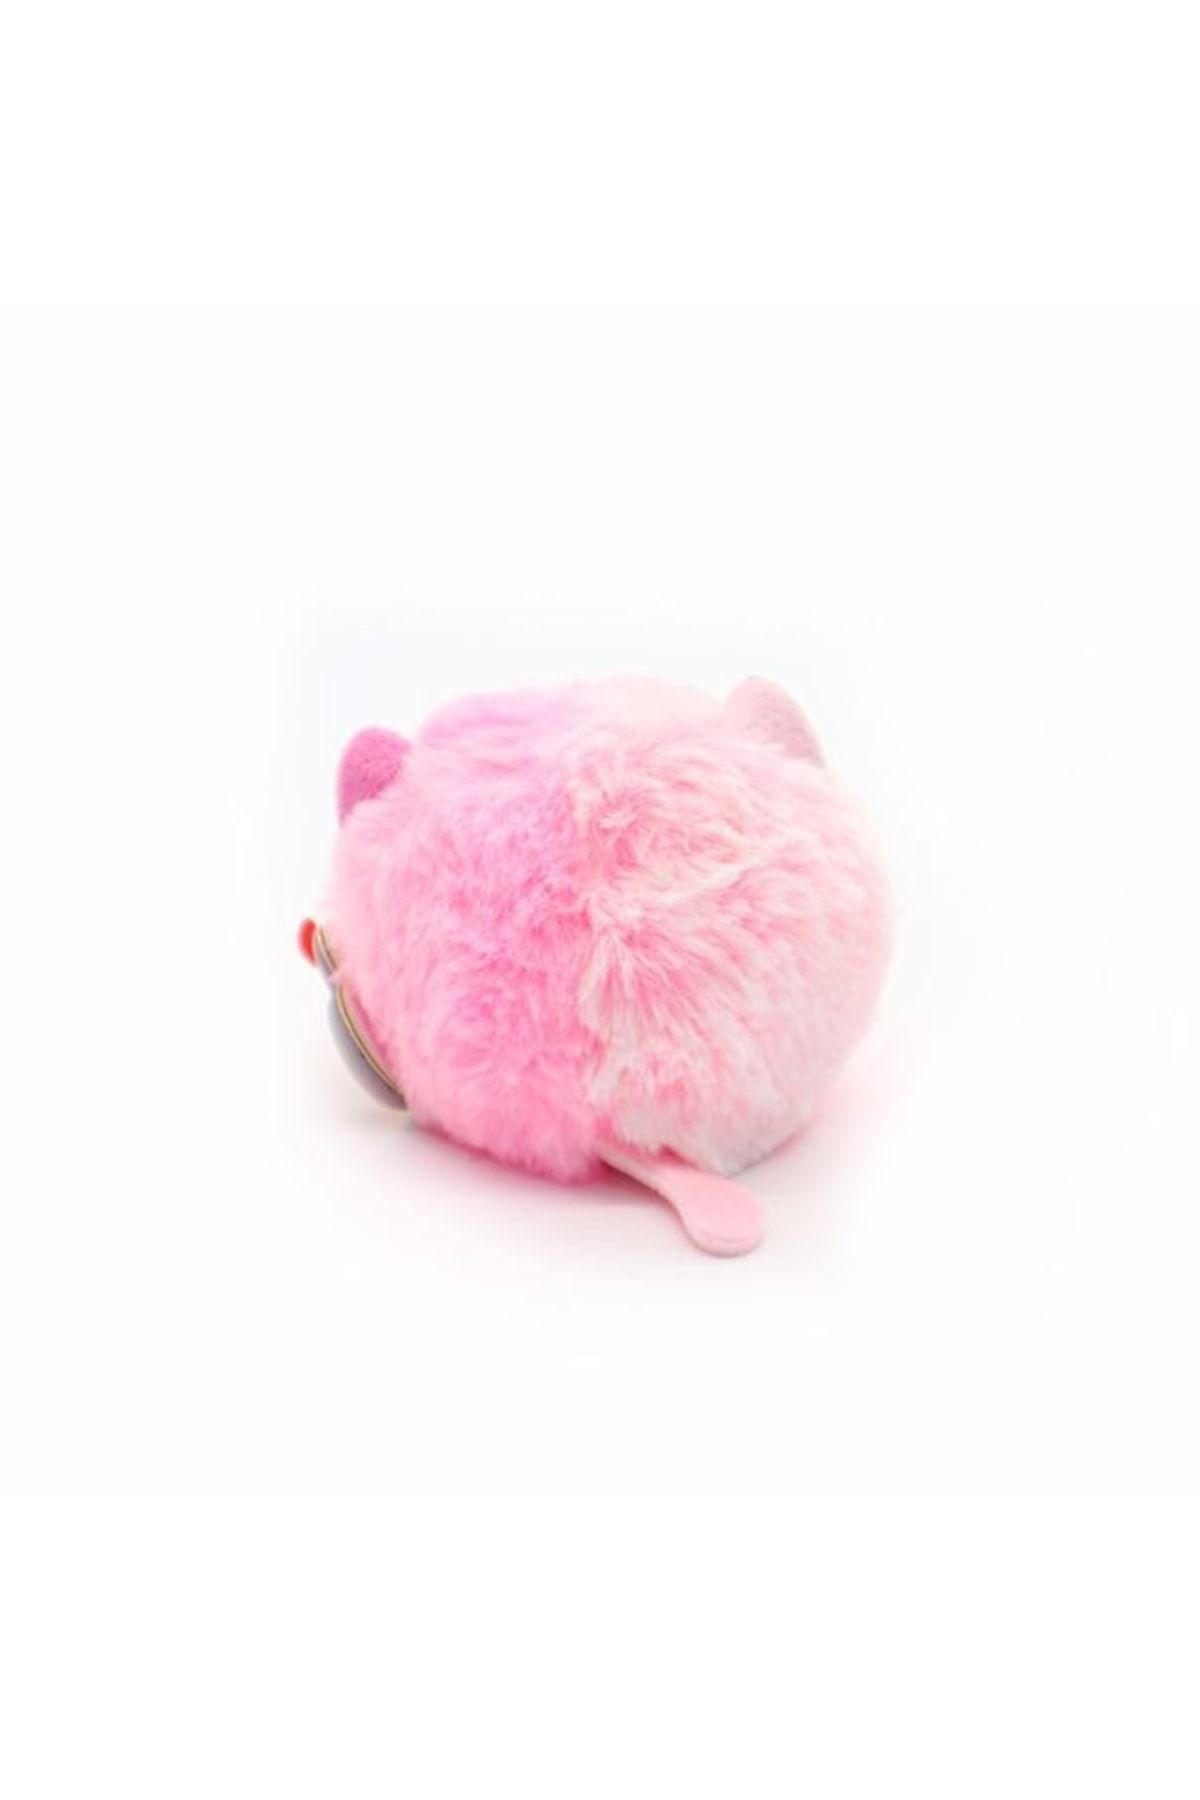 TY Beanie Boos Tıa - Cat Pink Typuf